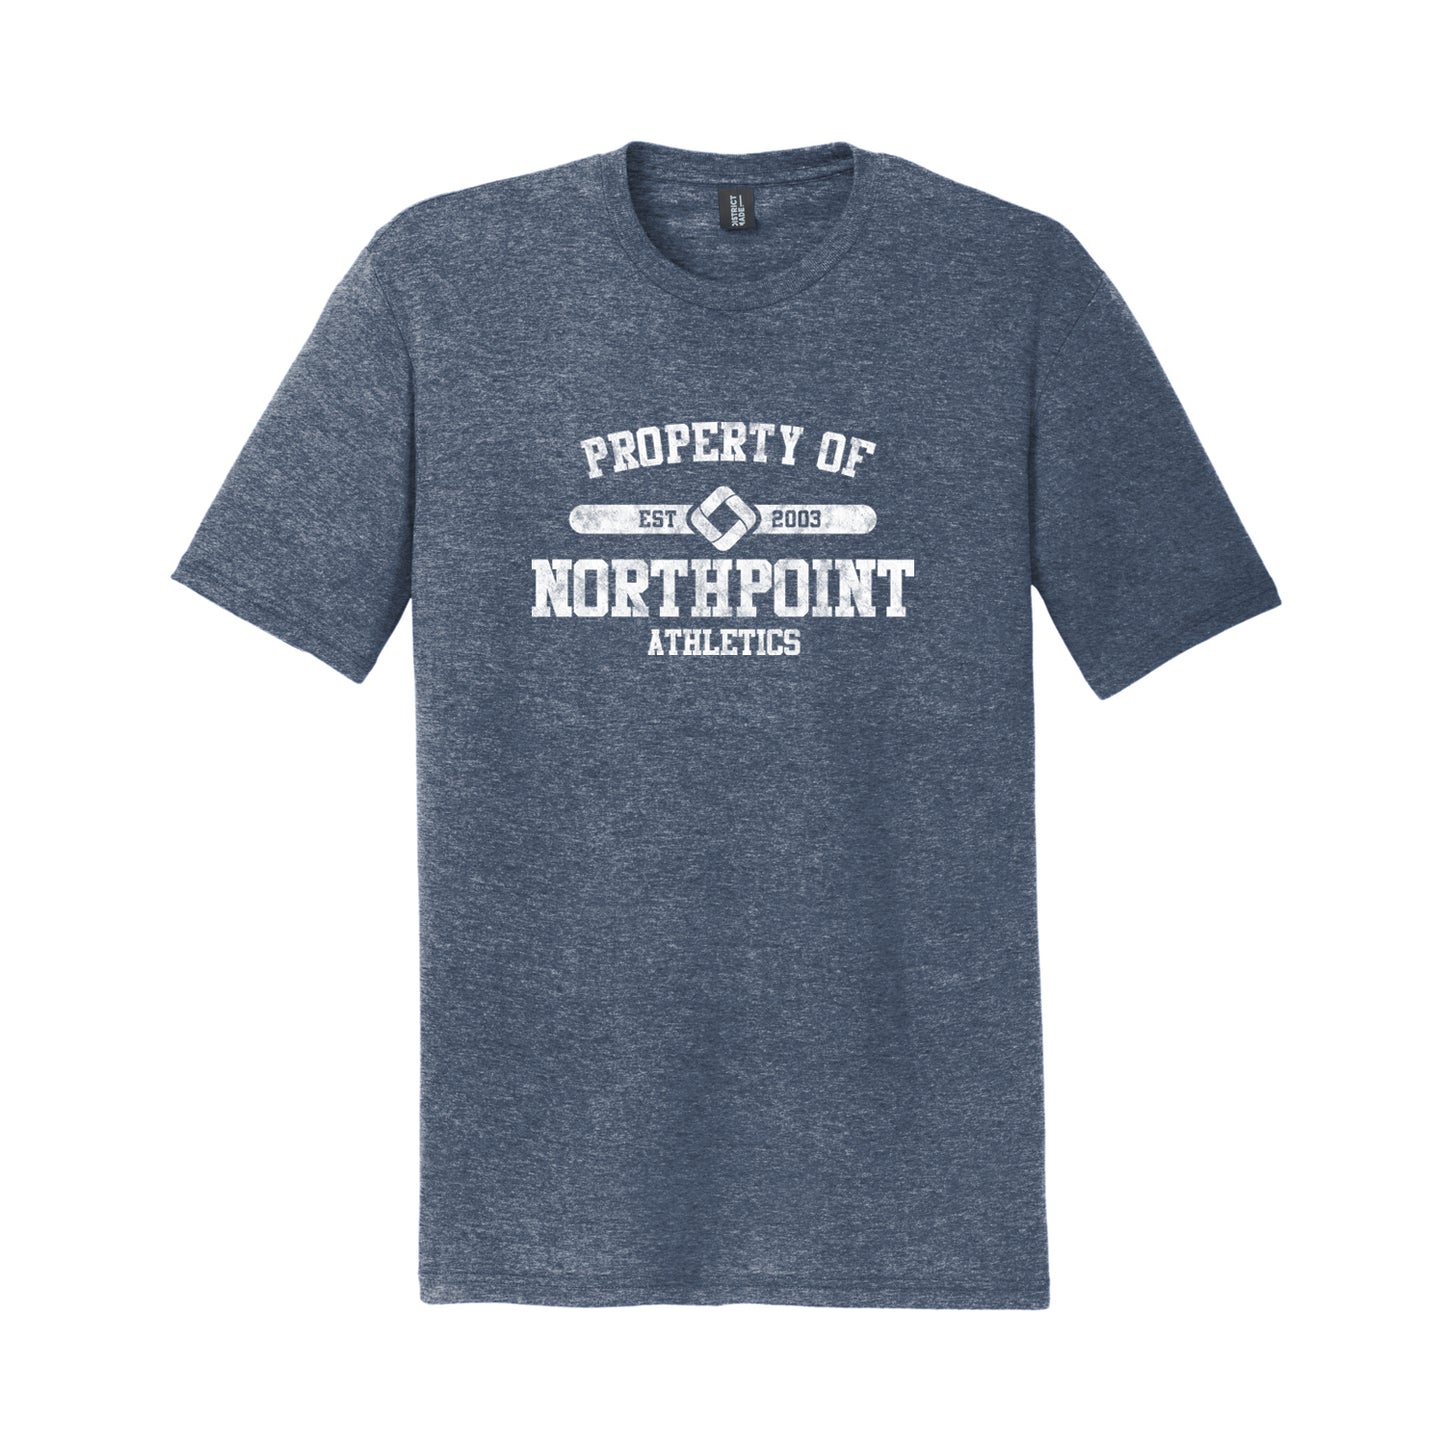 NorthPoint Athletics T-Shirt